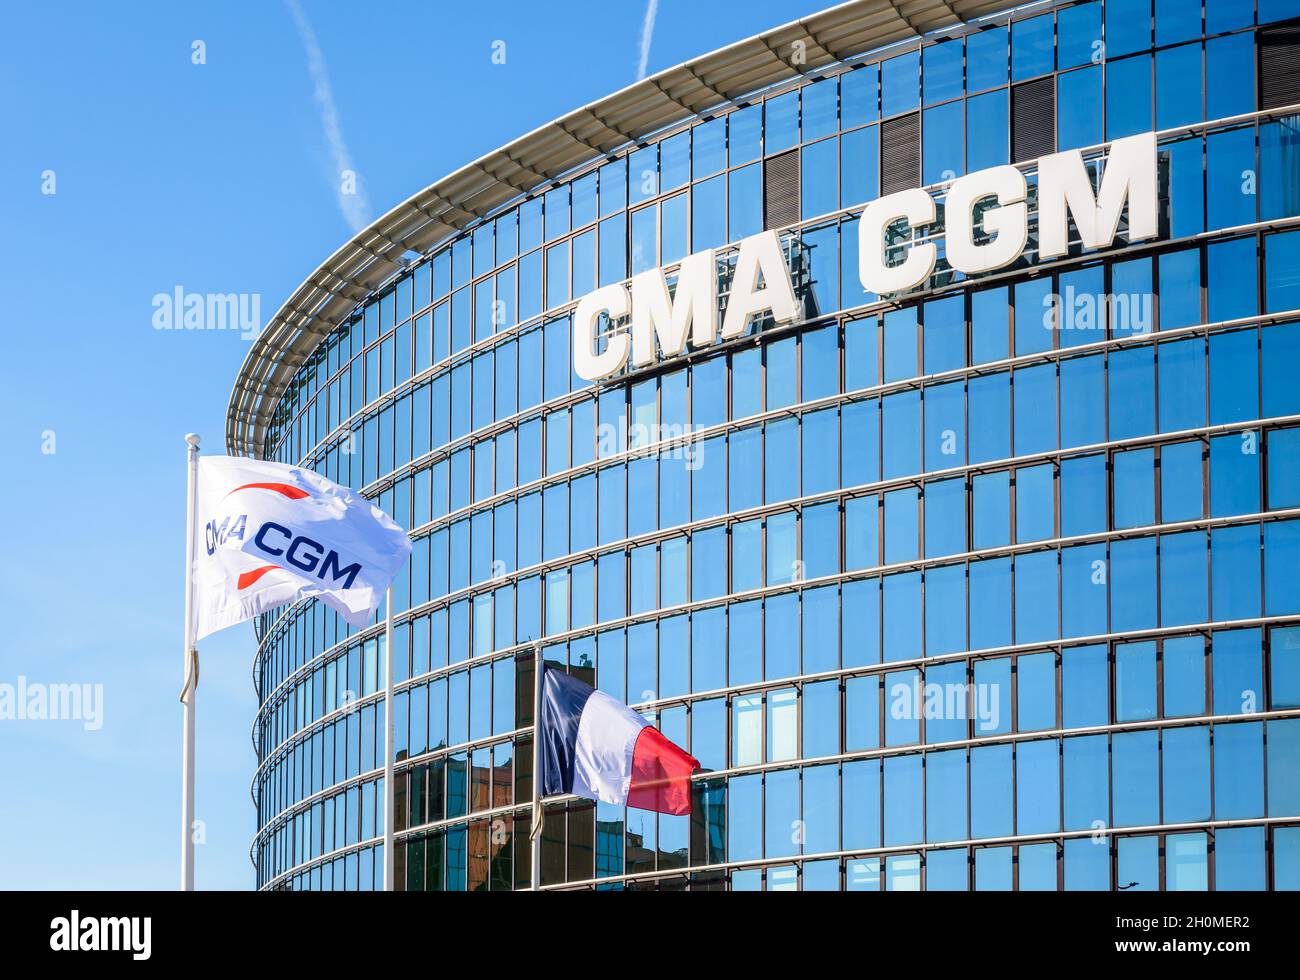 Büros der Reederei CMA CGM in Le Havre, Frankreich Stockfotografie - Alamy